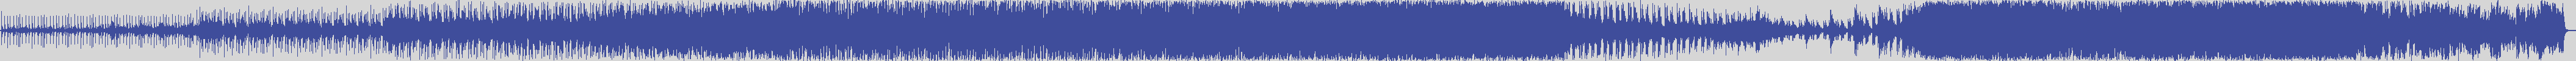 vitti_records [VIT005] Aware Project - Karuna [Original] audio wave form